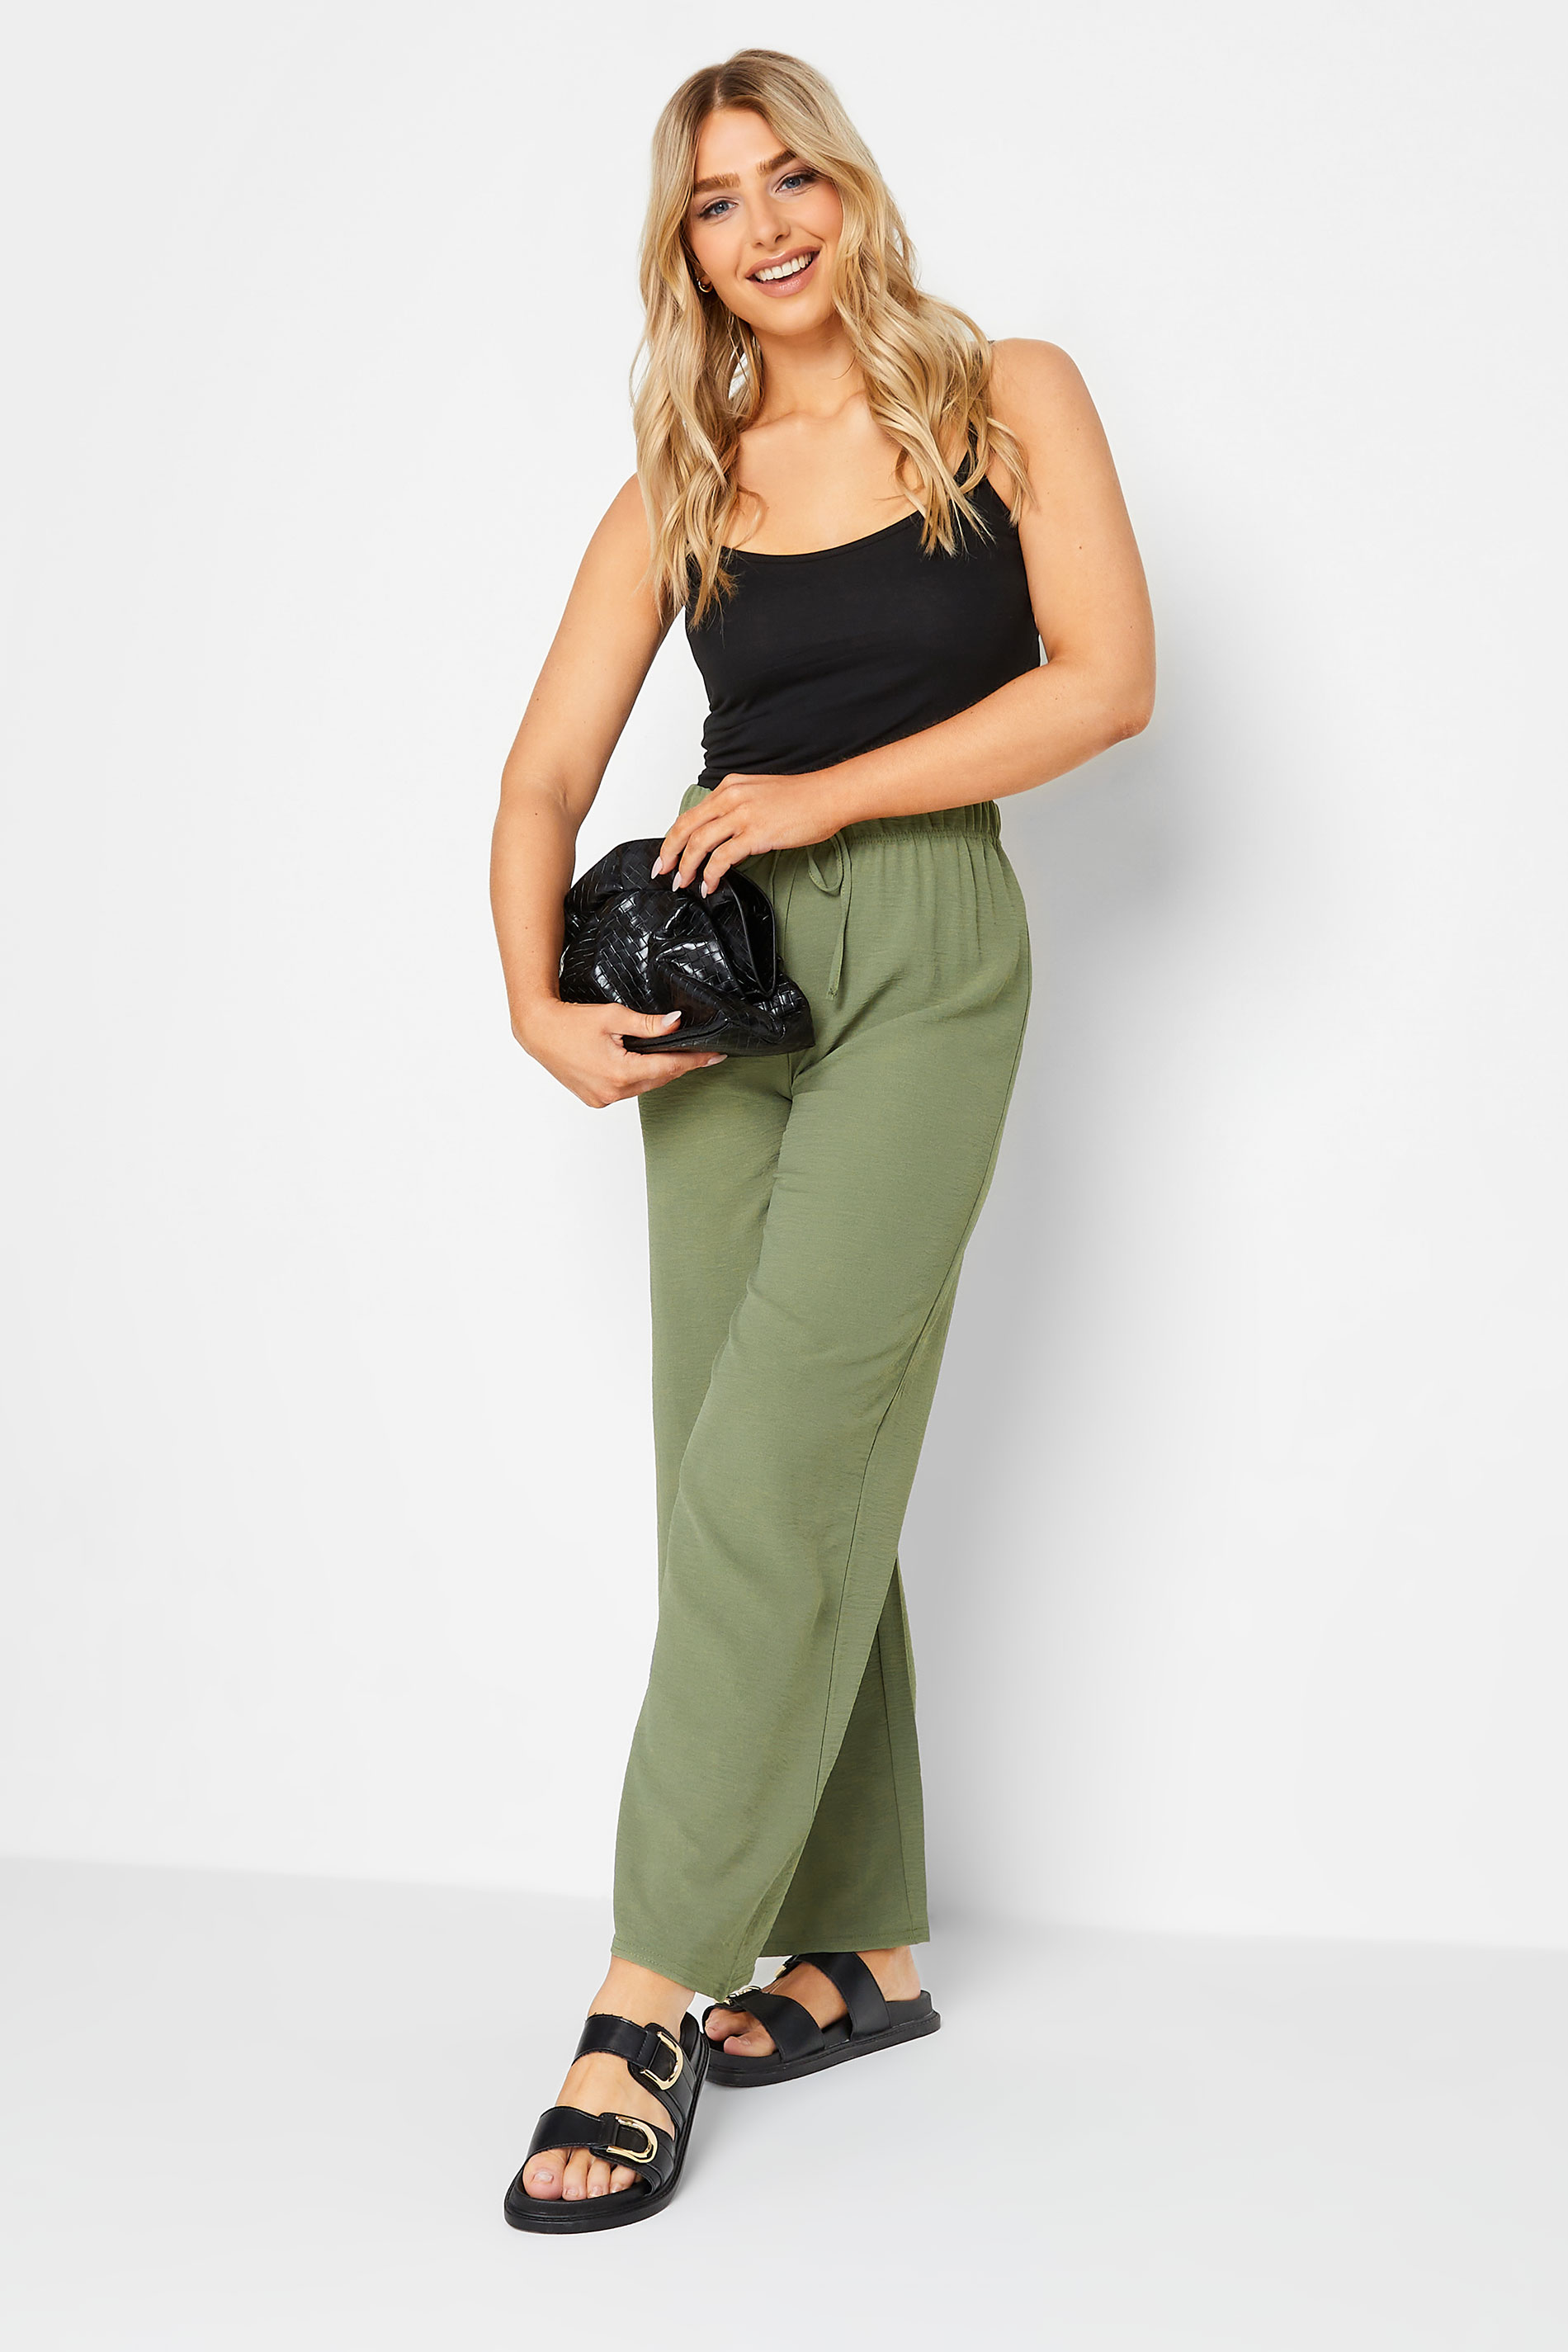 M&Co Khaki Green Crepe Wide Leg Trousers | M&Co 3